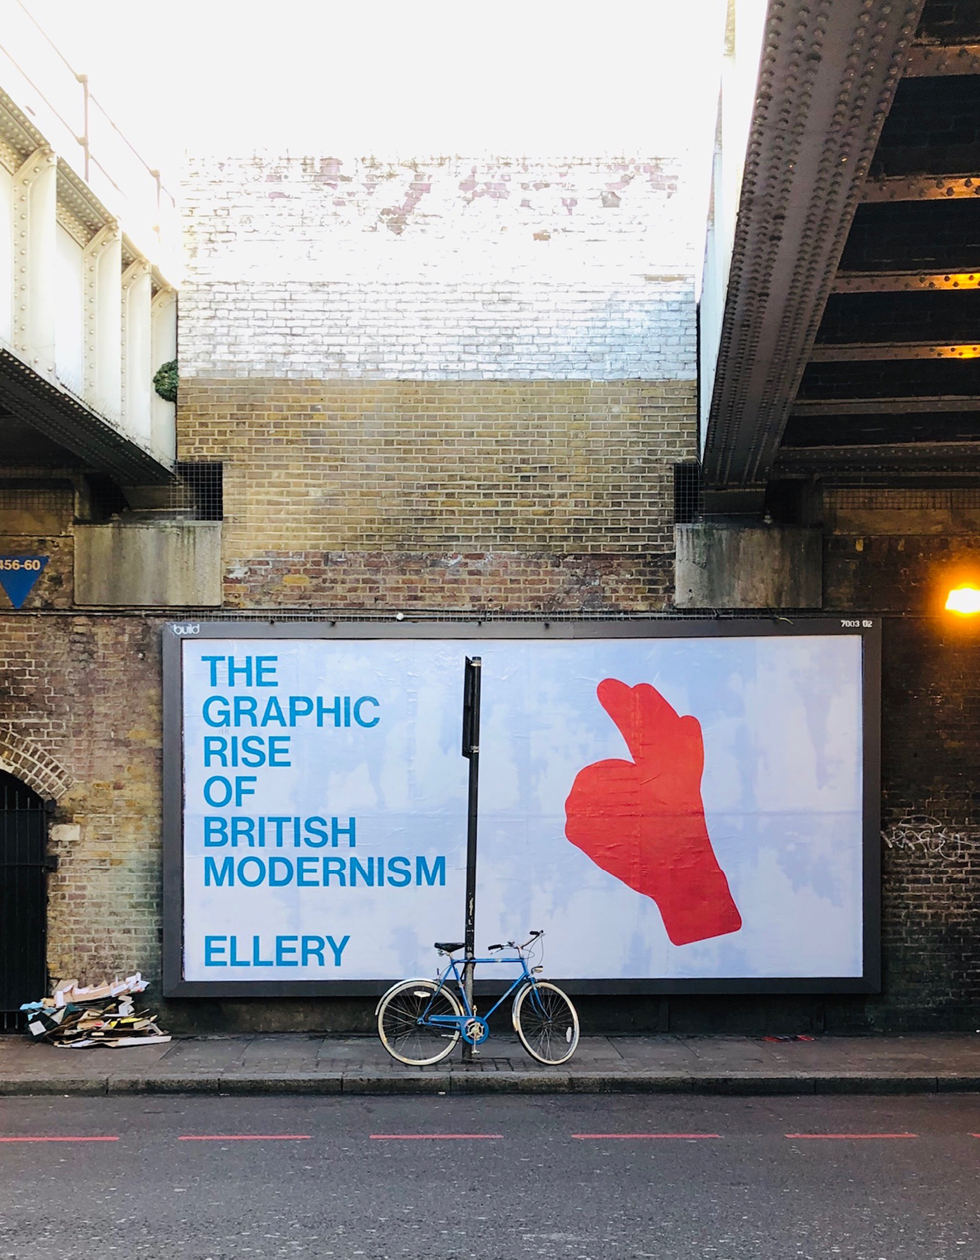 The Graphic Rise of British Modernism, Jonathan Ellery, 2019